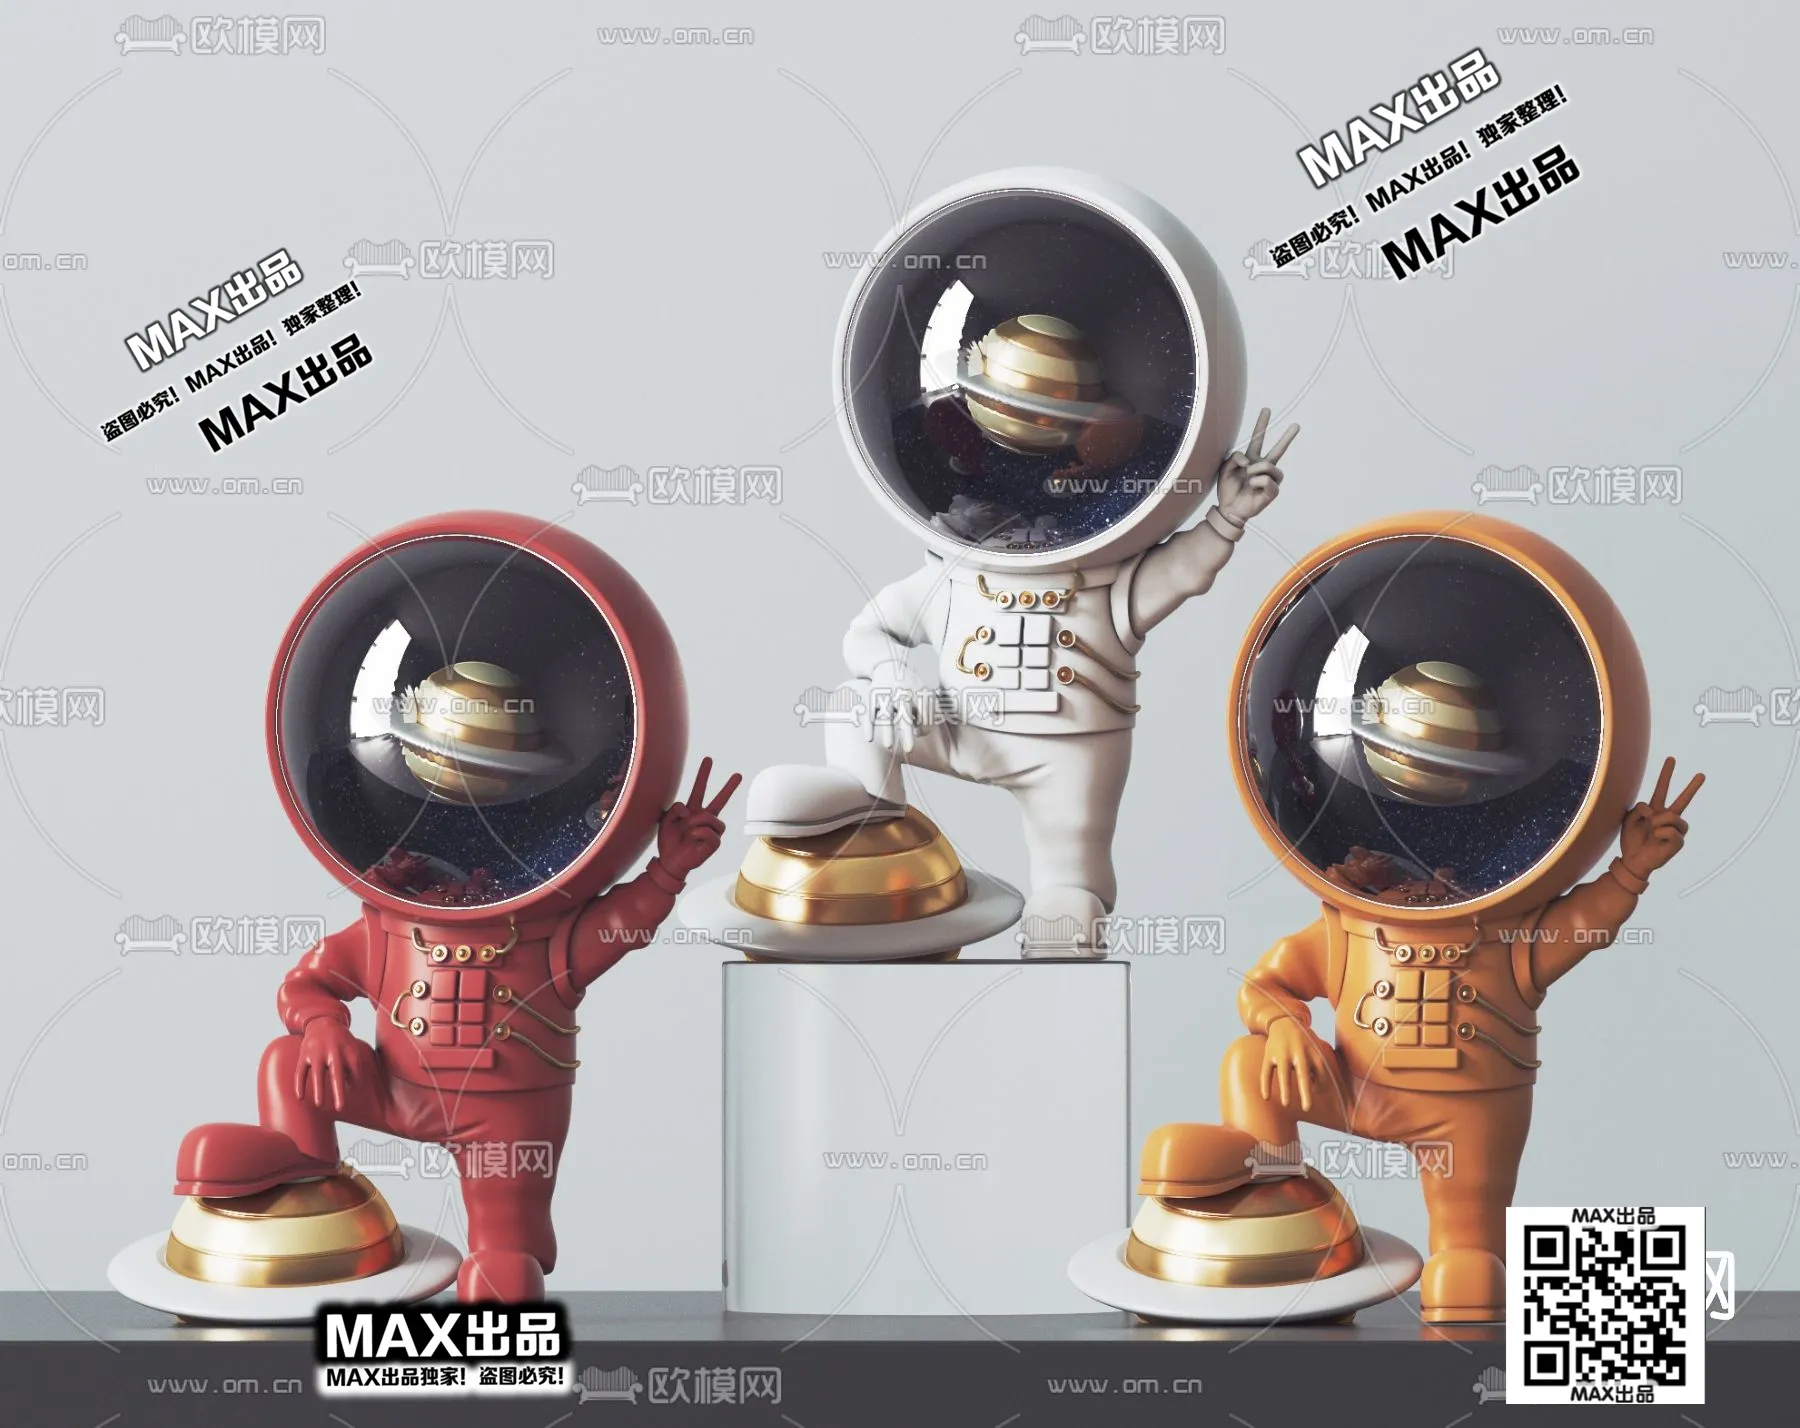 DECORATION 3D MODELS – 3DS MAX – 018